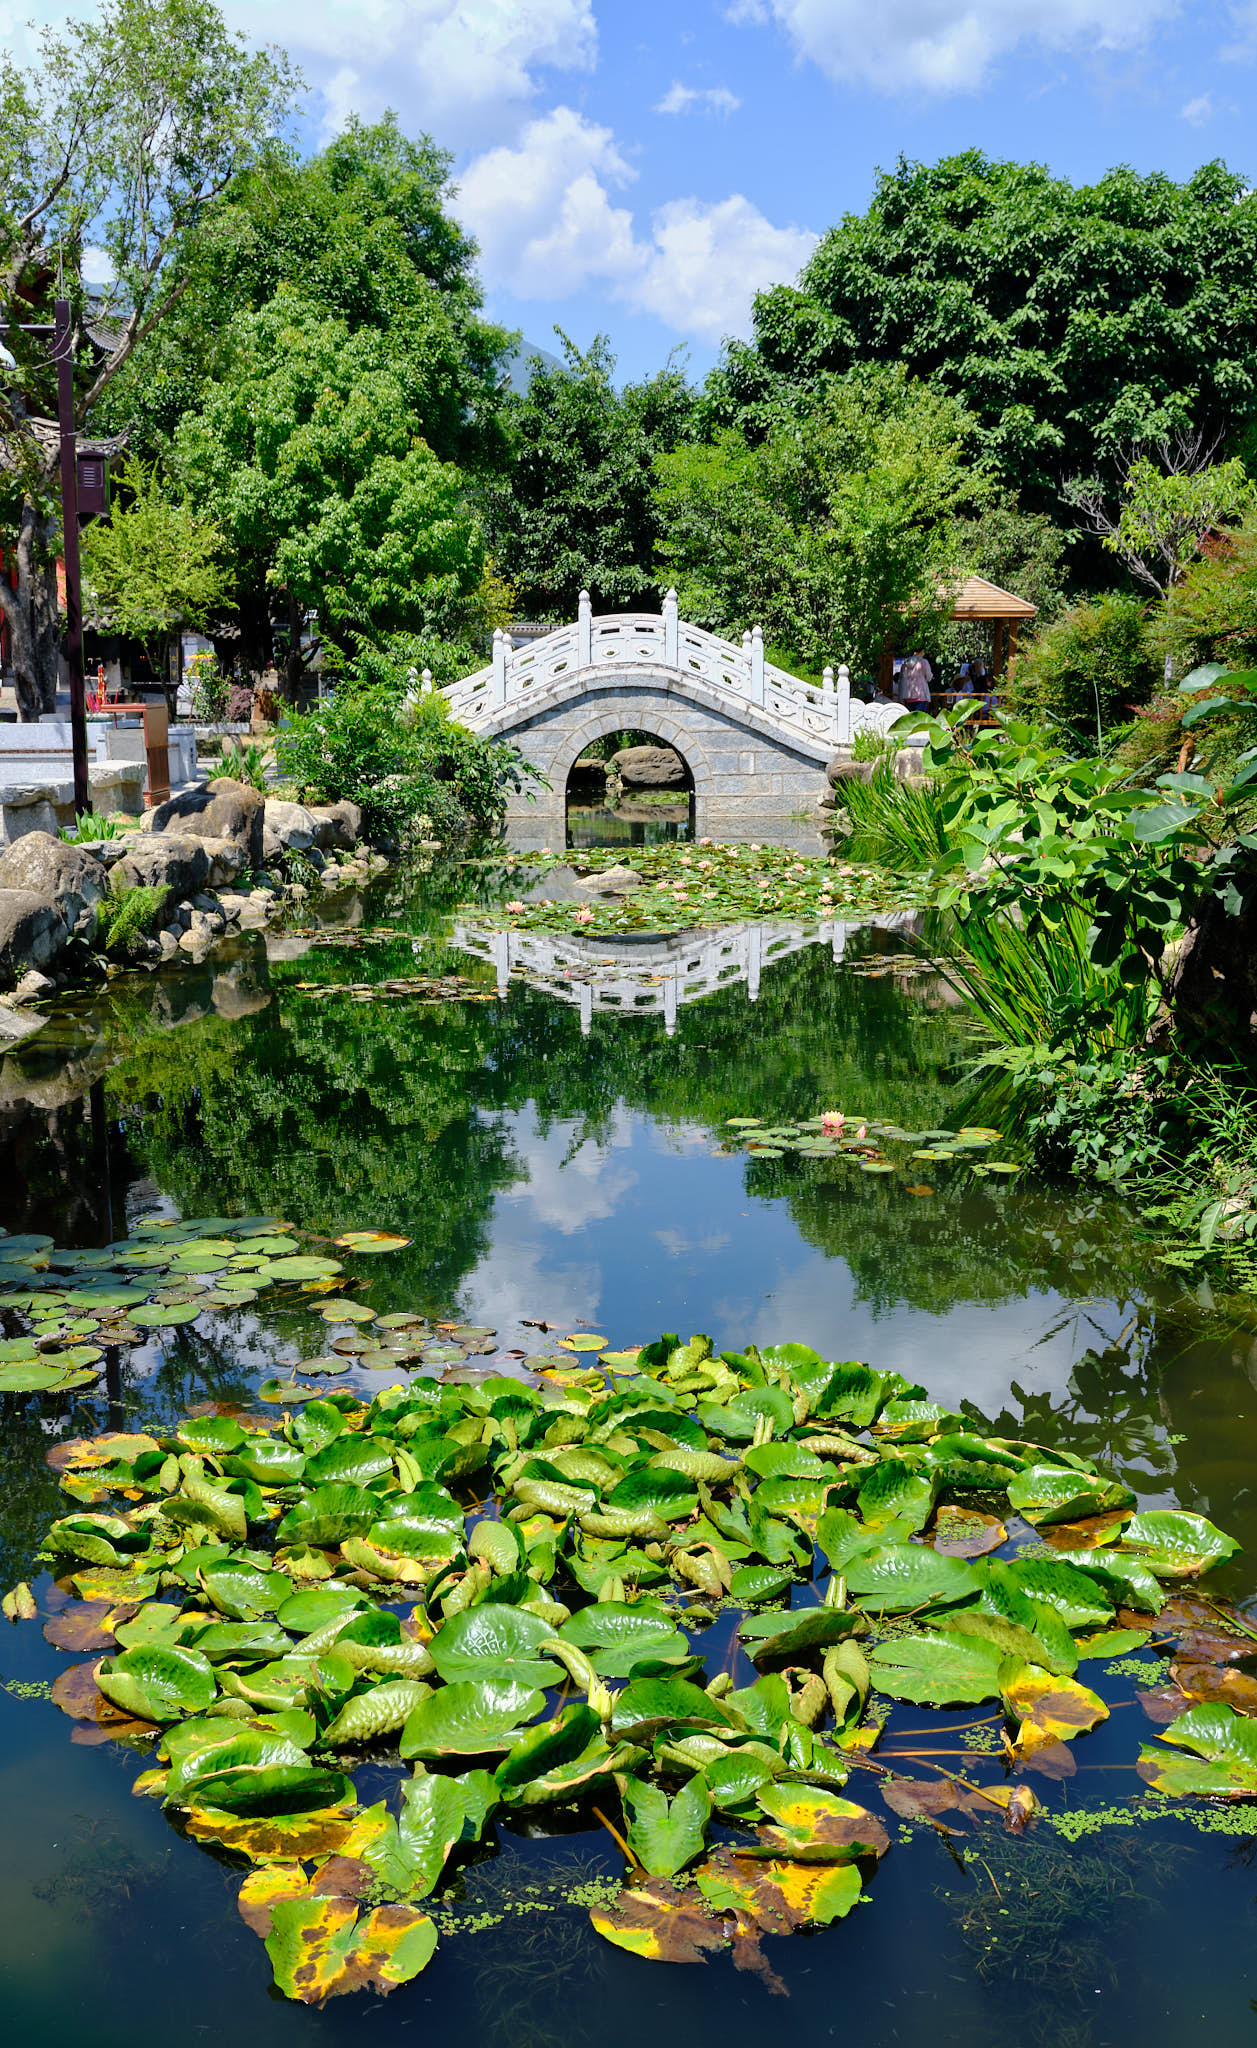 Entrance bridge and water reflection at Xizhou Ancient Town